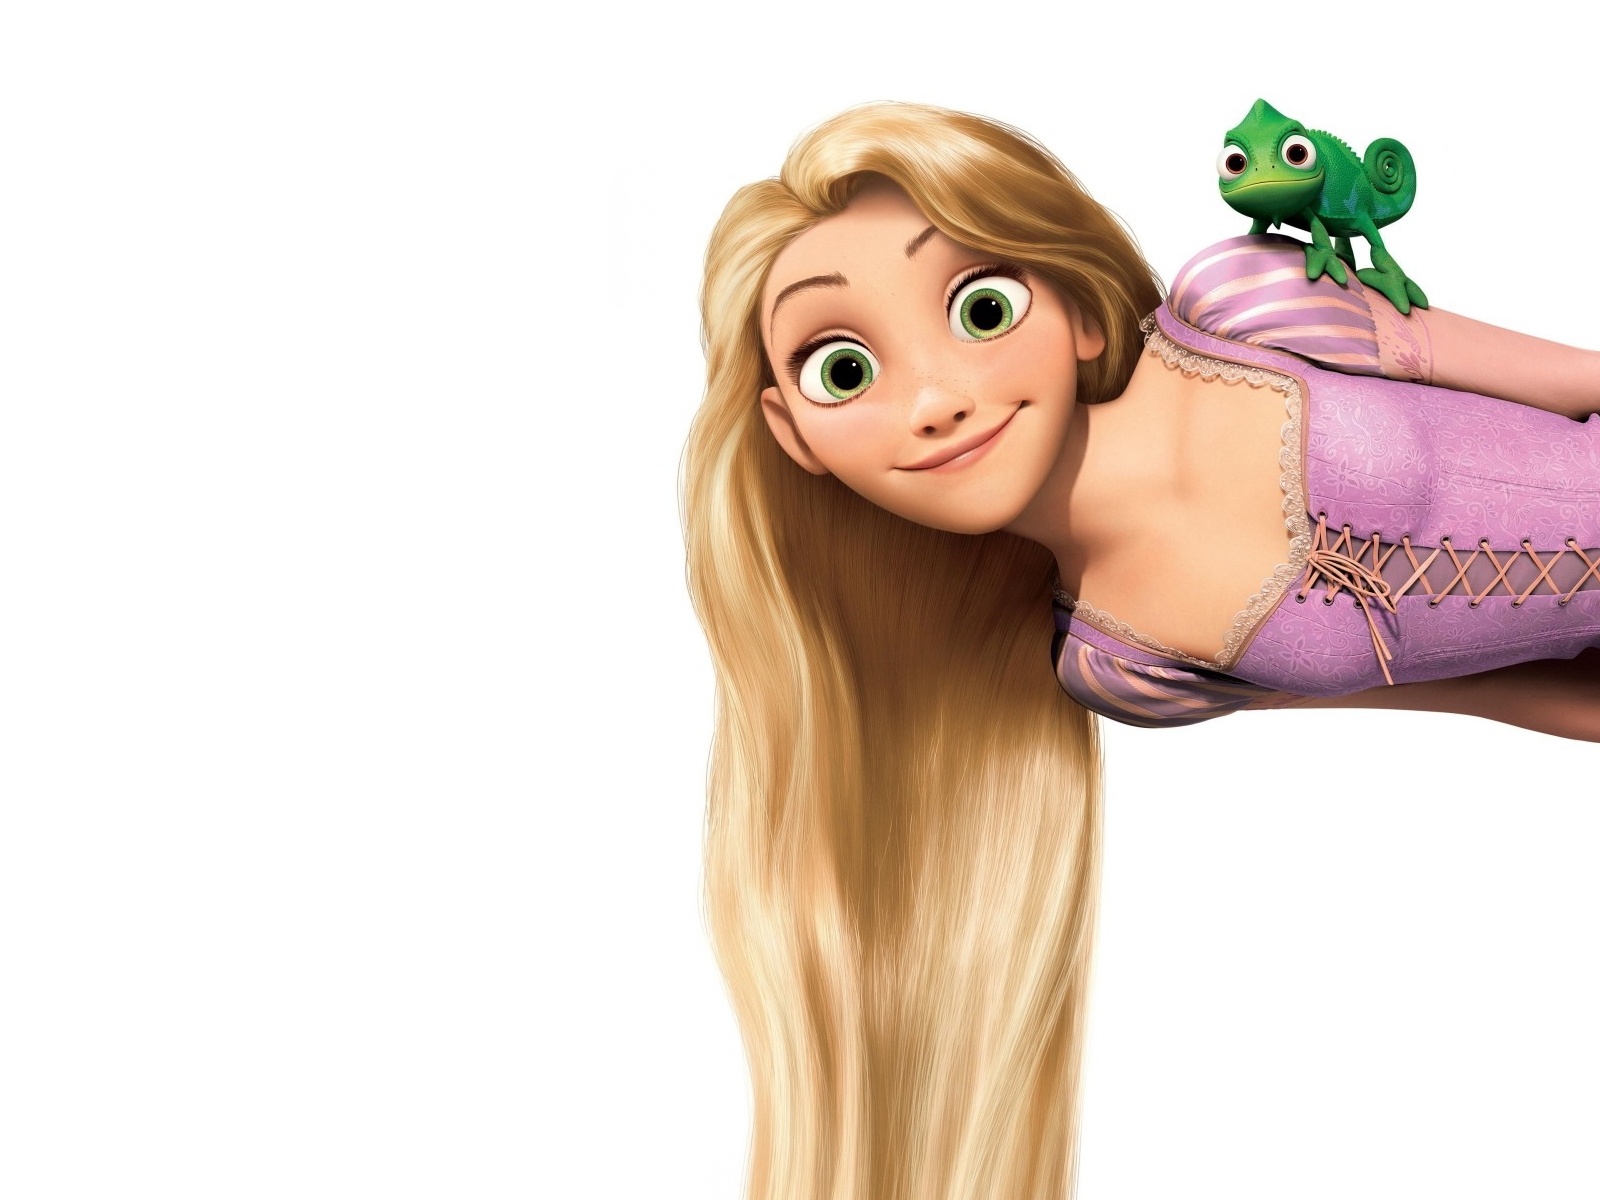 78 Best images about rapunzel on Pinterest Disney, Rapunzel and Tangled. 